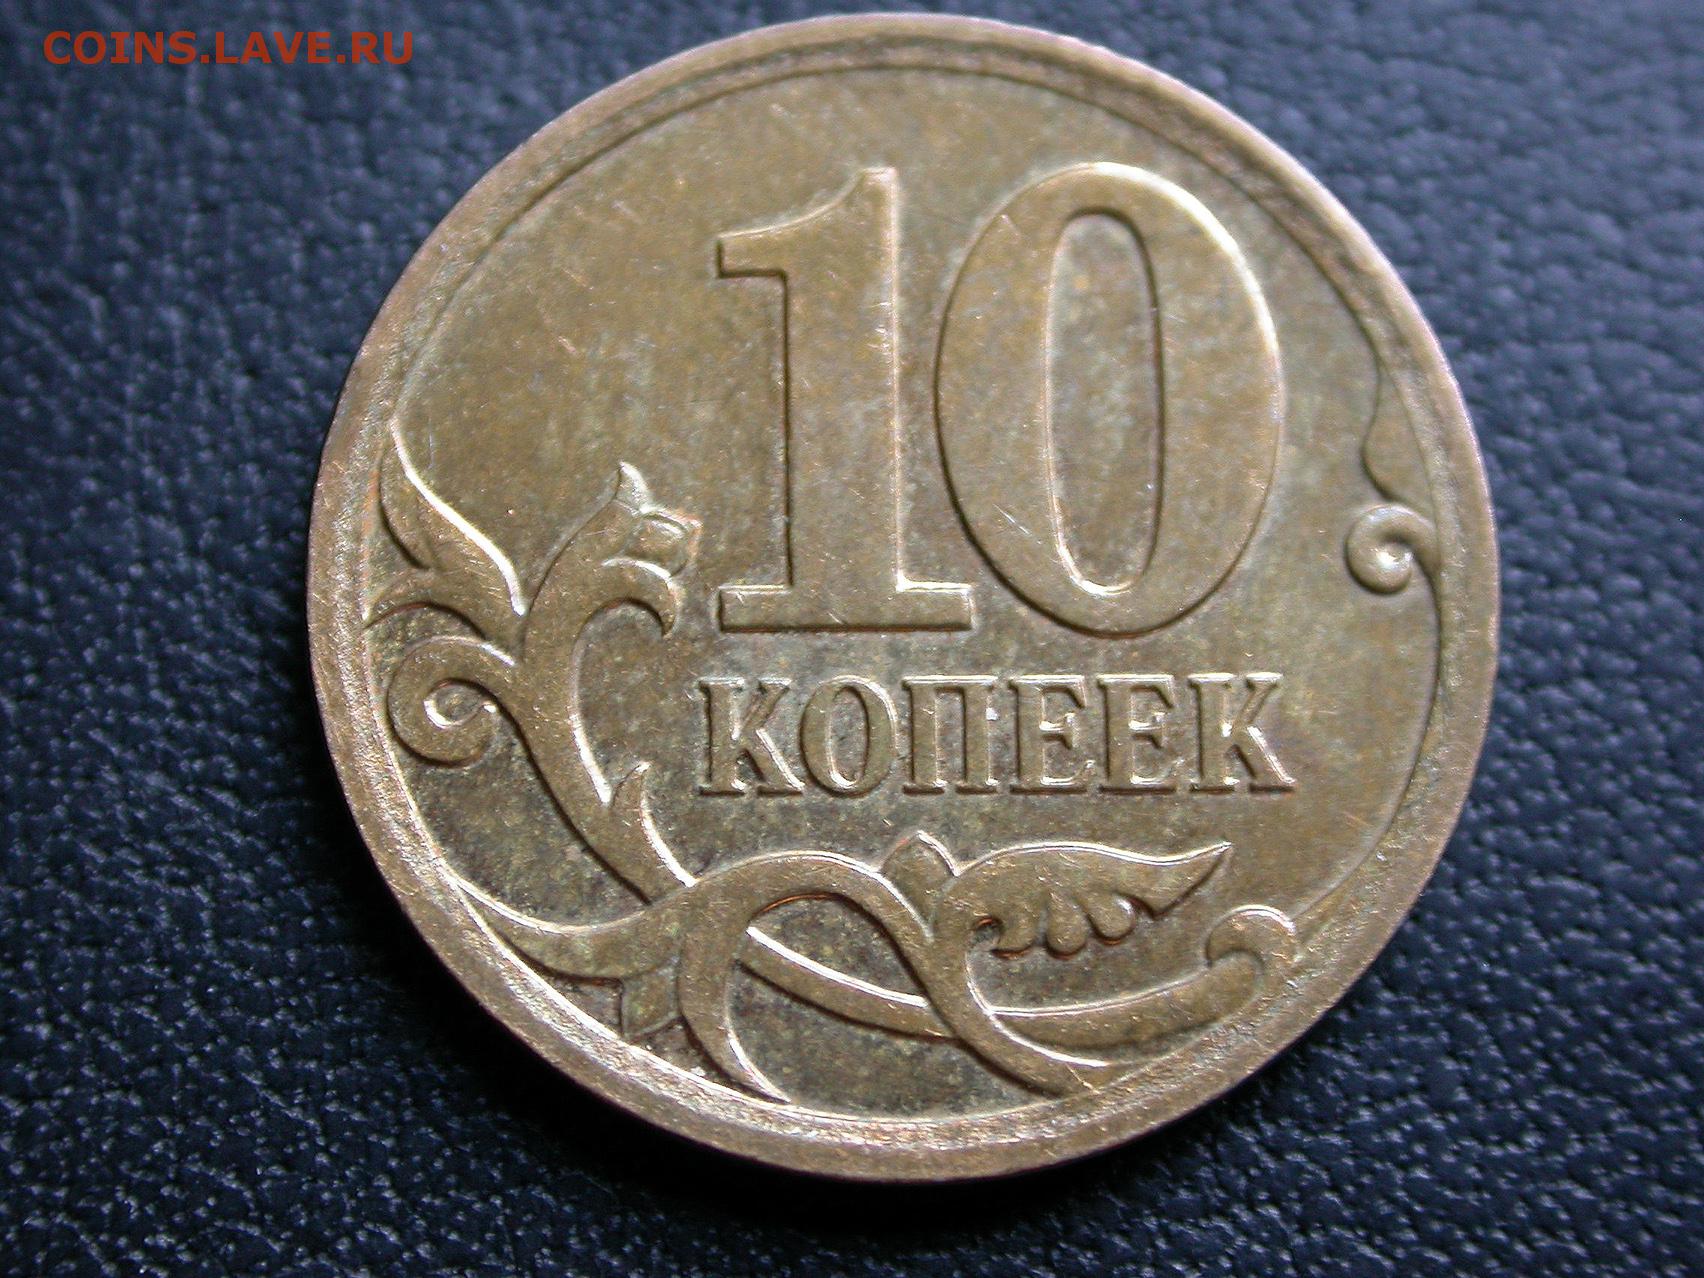 11а 11 б. Перепутка 1 рубль 2014 реверс 10 копеек. 11а-004. Монета перепутка реверс-реверс. 10 Коп 2013г полный раскол.